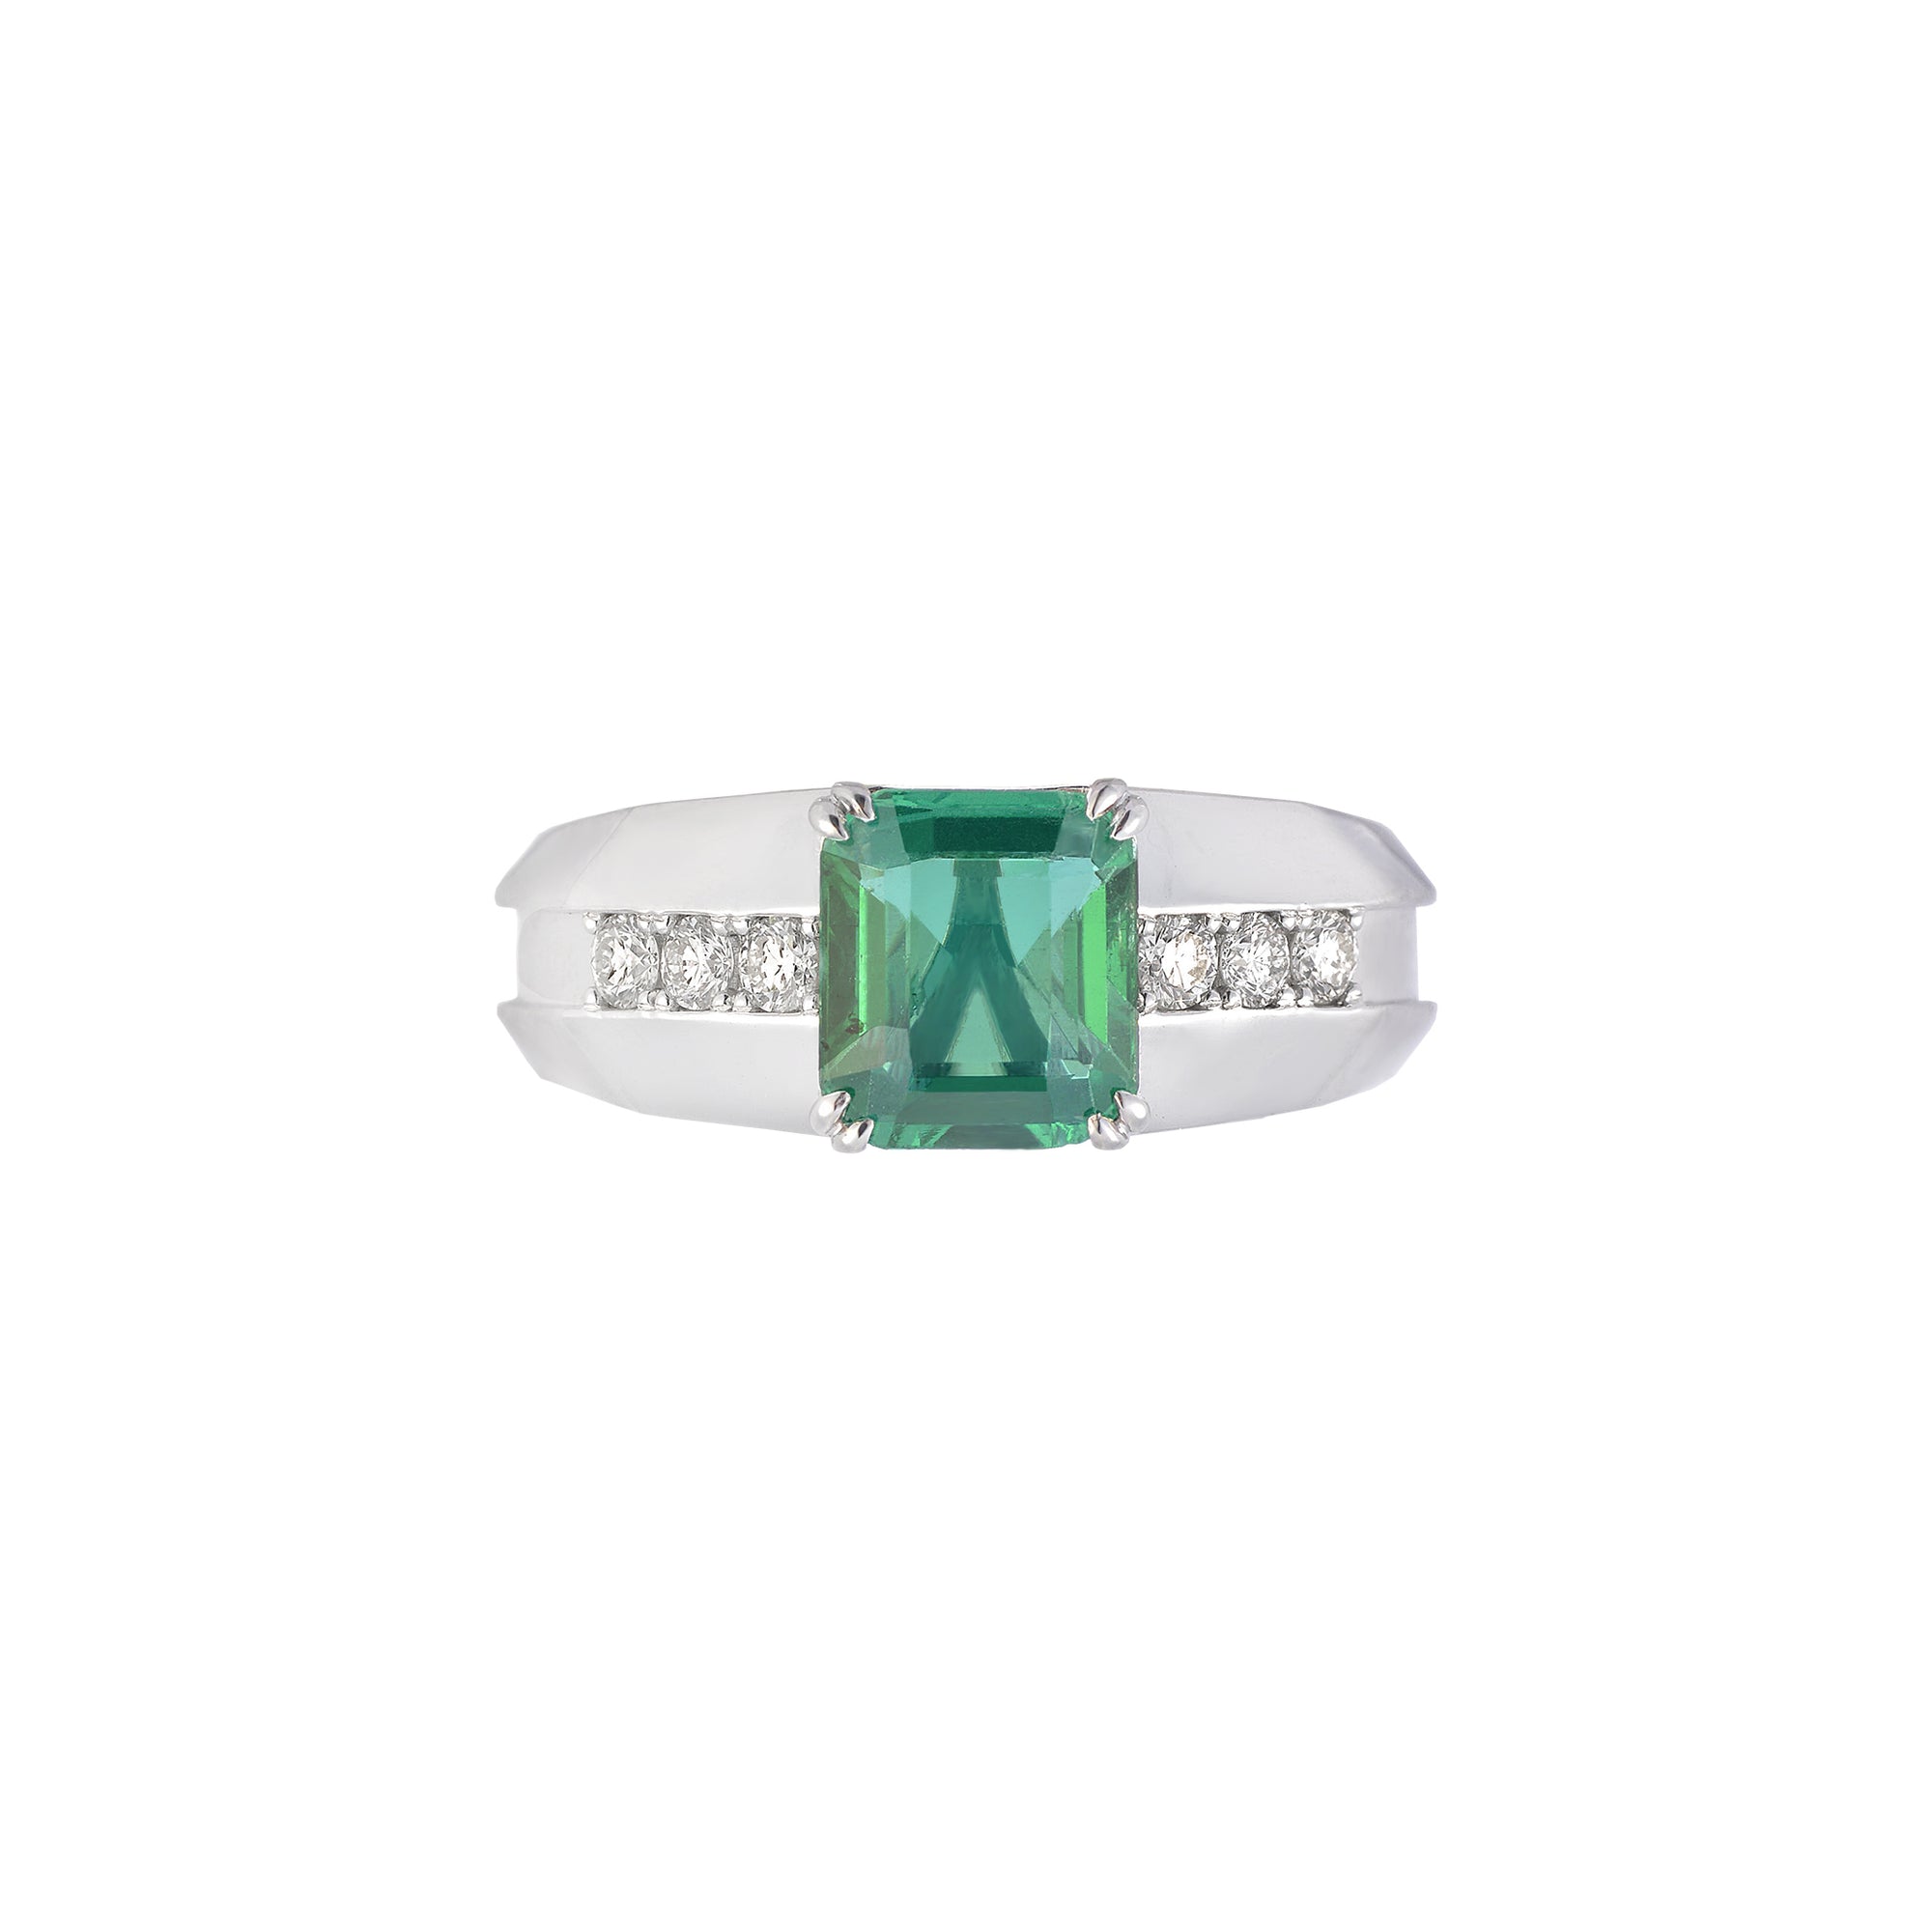 Benjames Chevron Gemstone Ring - Green Emerald 2022-104